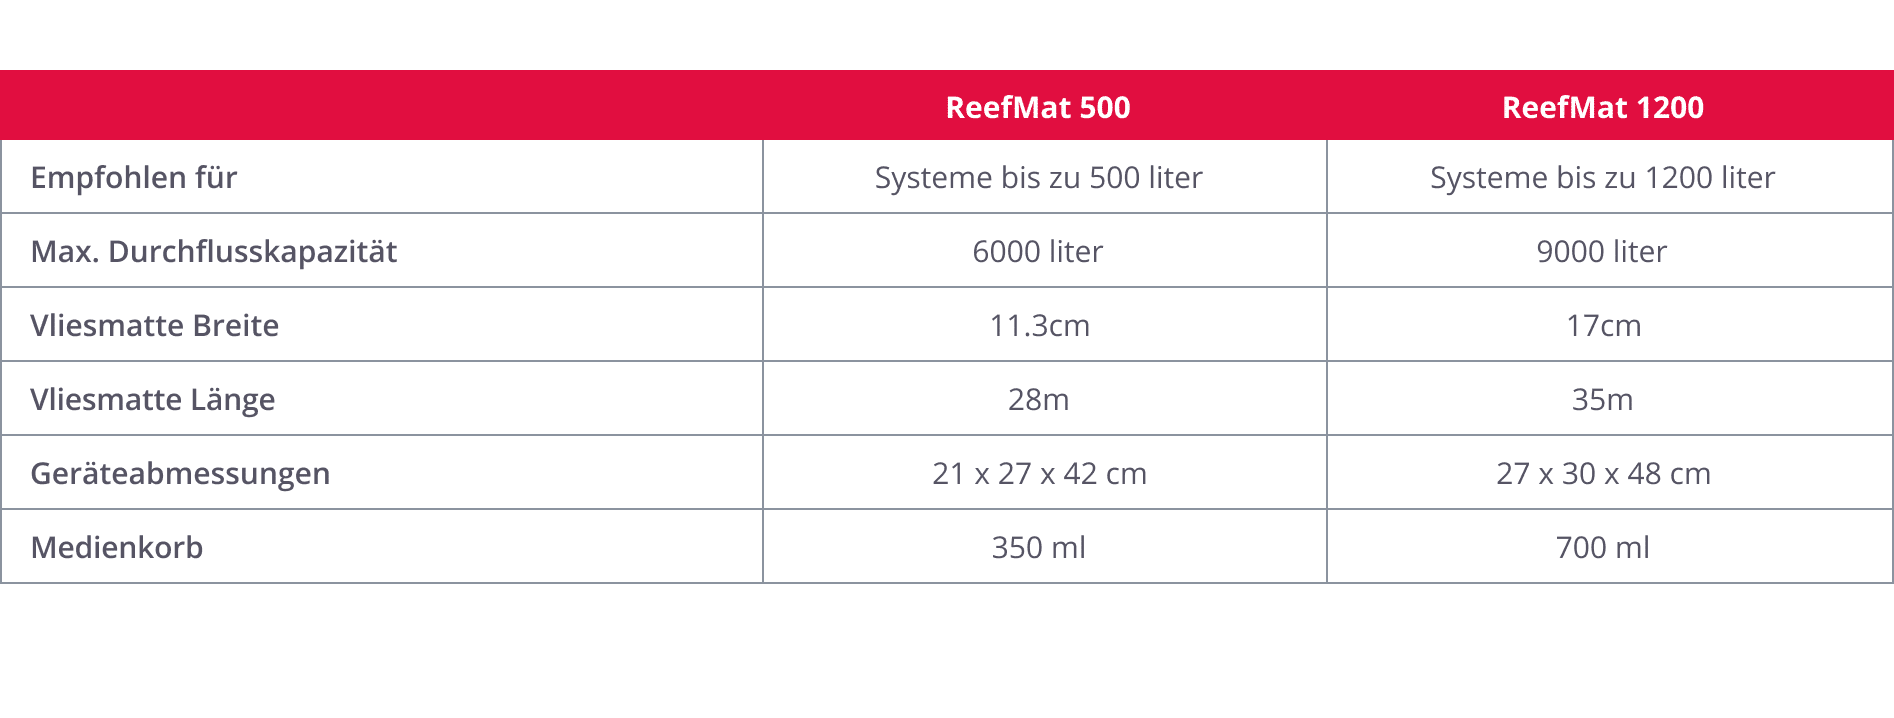 ReefMat 500 (Incl. Cloud services)